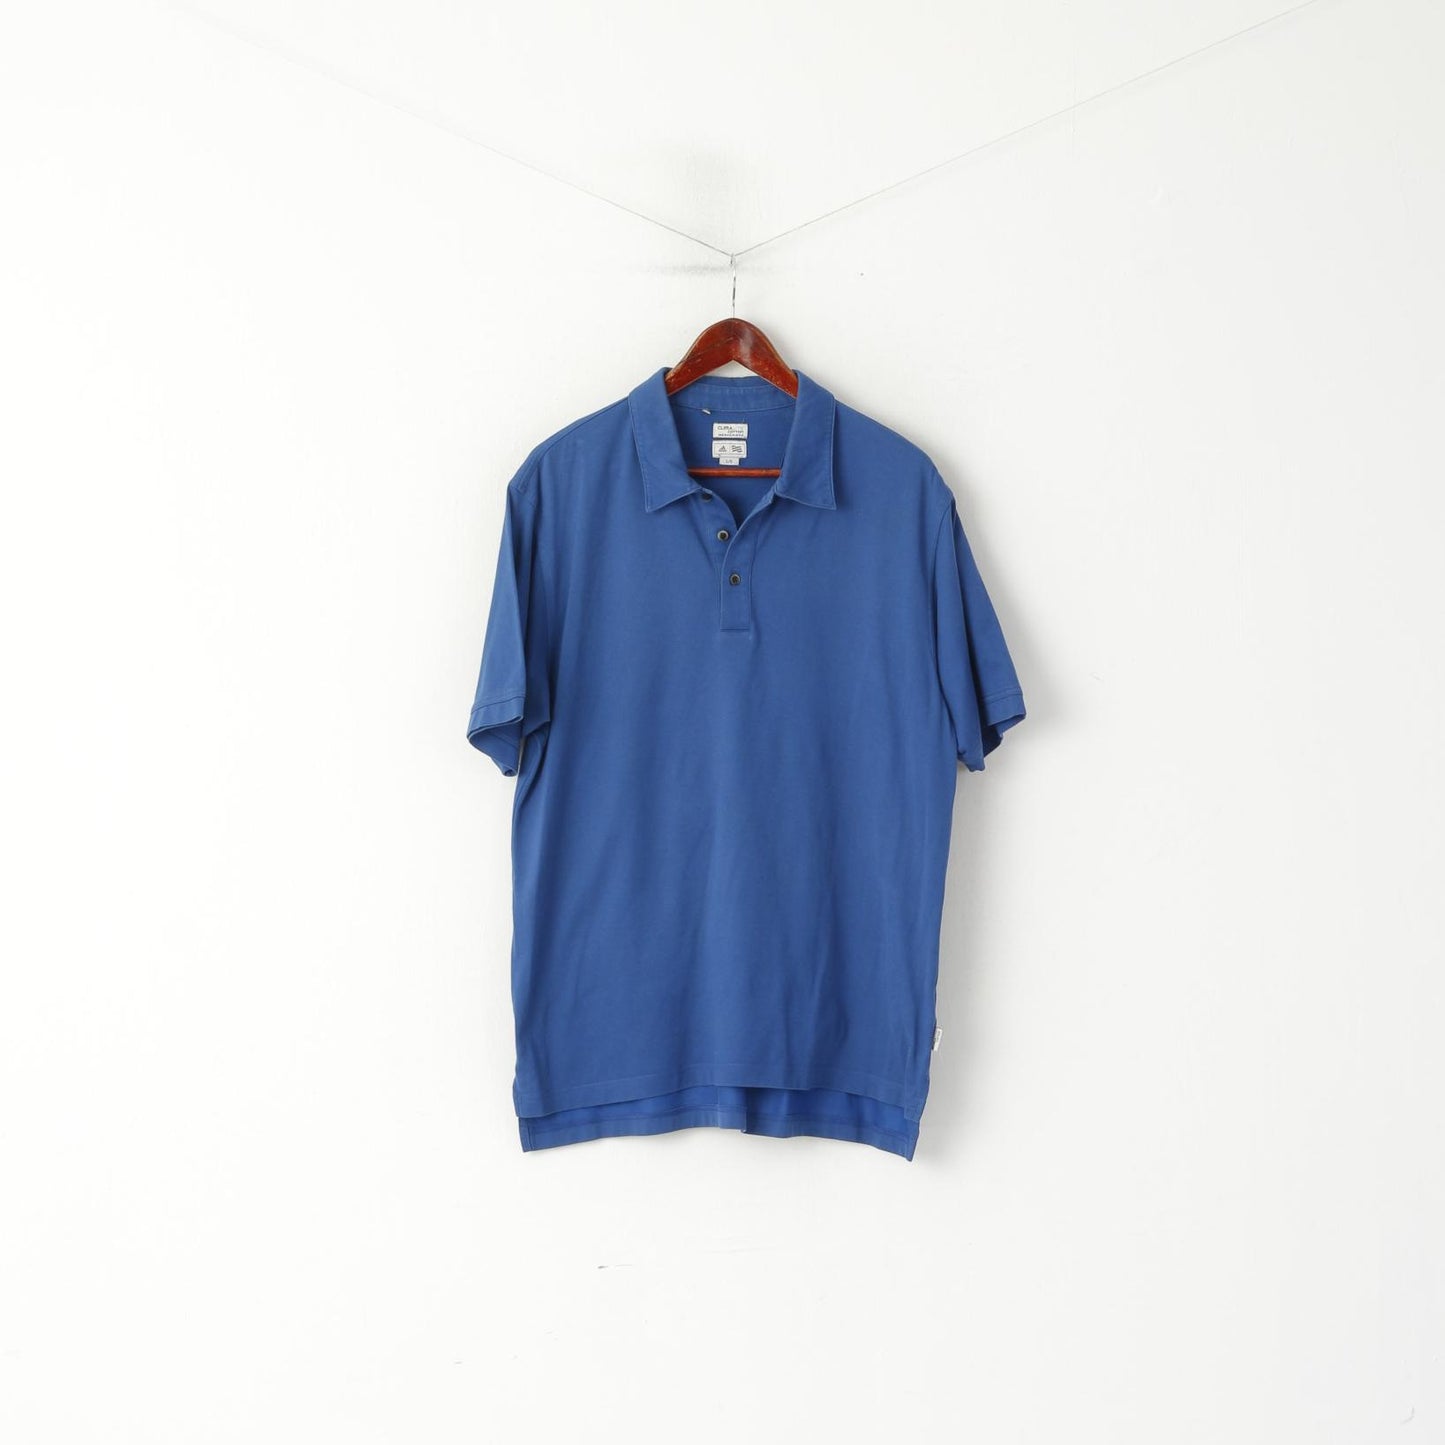 Adidas Men L Polo Shirt Blue Indygo Cotton Mercerized Plain Classic Clima Top